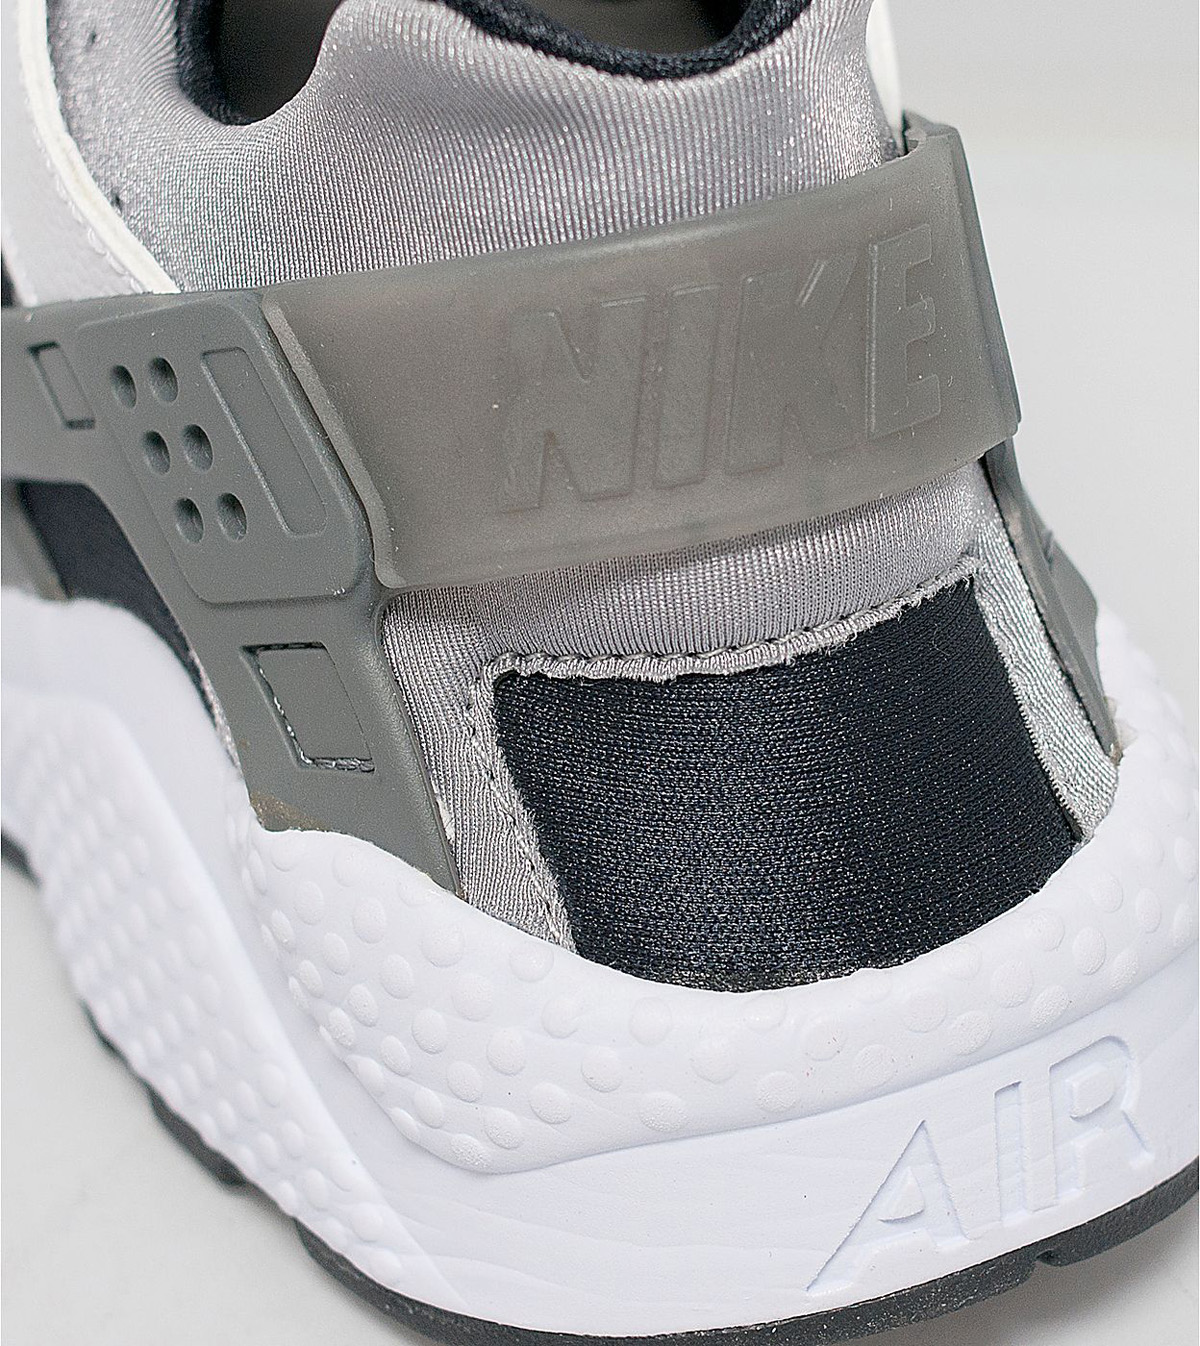 Nike-Air-Huarache-white-wolf-grey-black-4